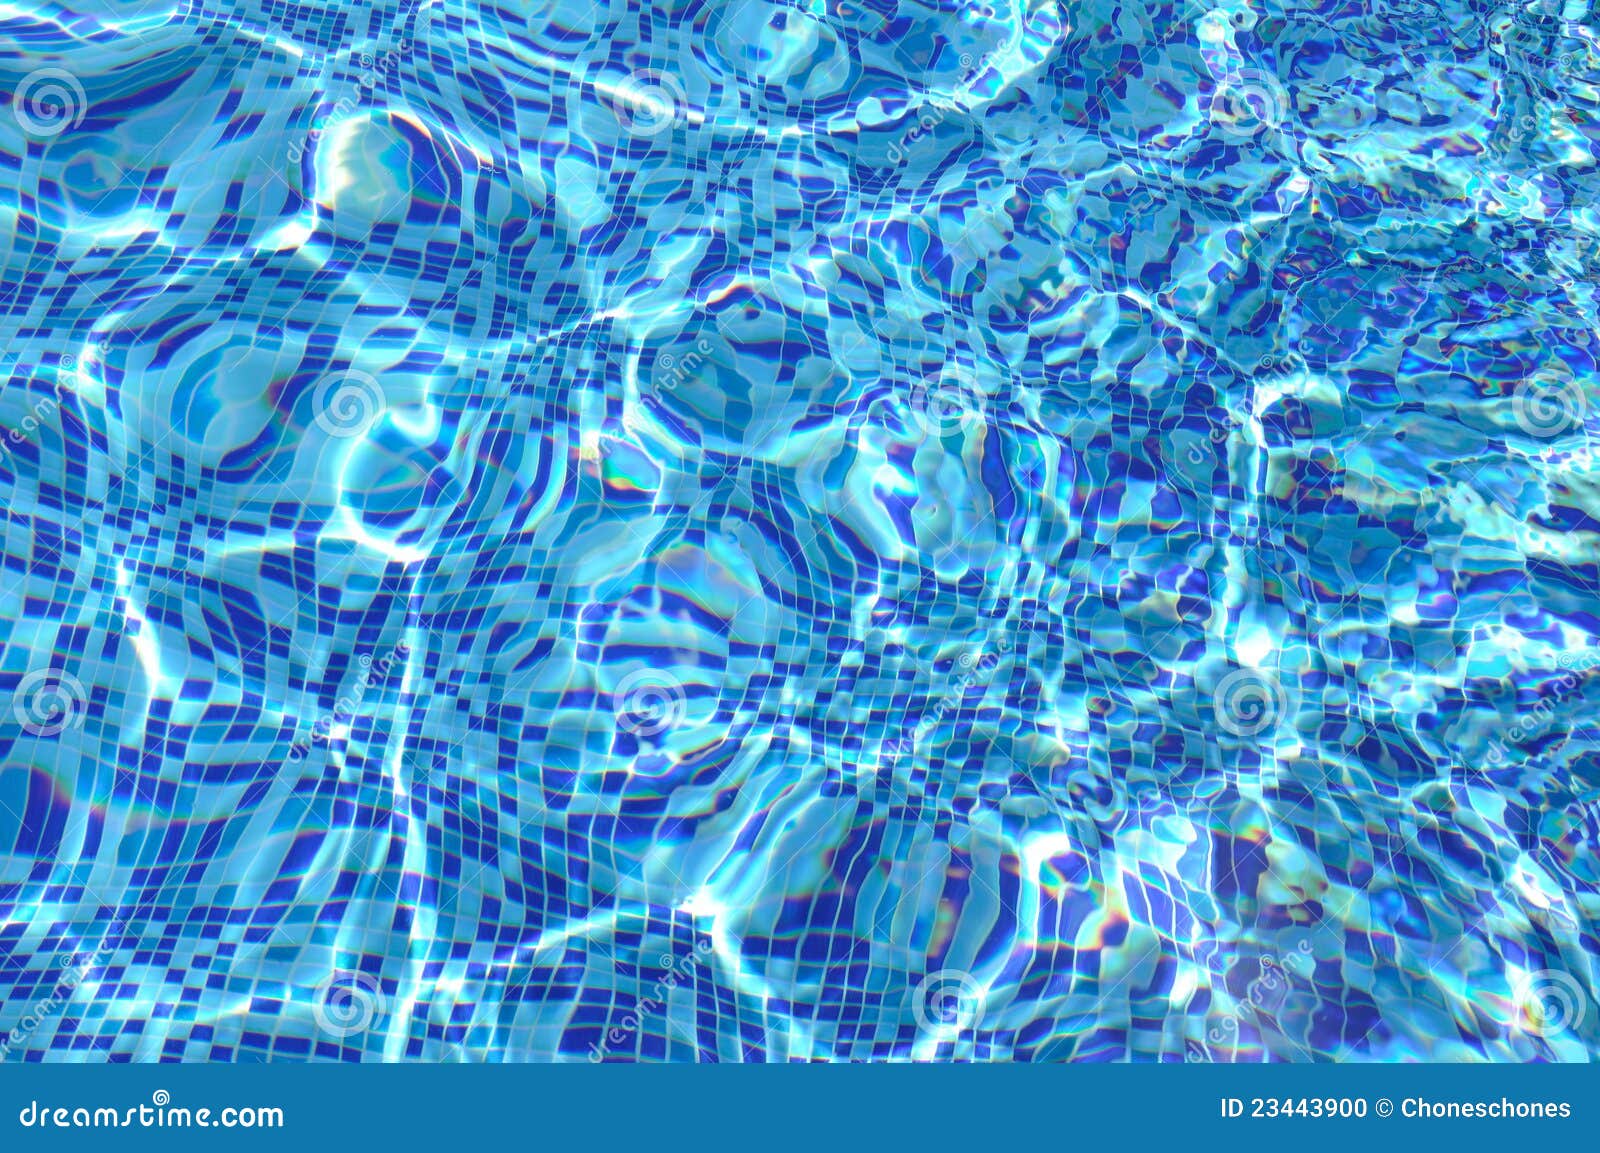 Intense blue swimming pool water texture